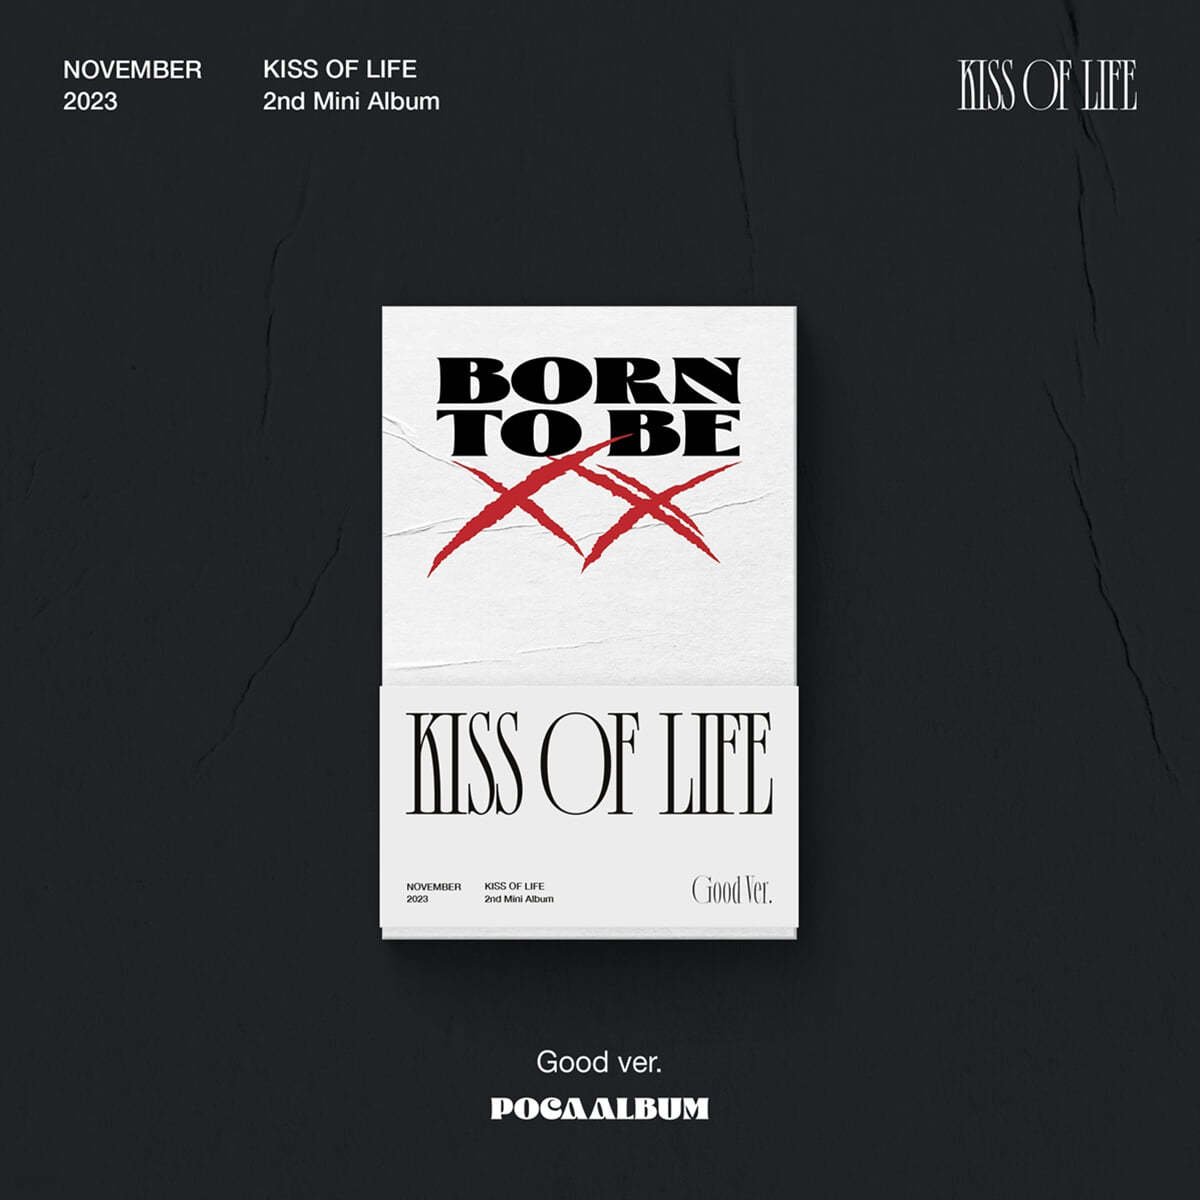 Copy of KISS OF LIFE - 2nd Mini Album Born to be XX (POCA) (Good Ver.)